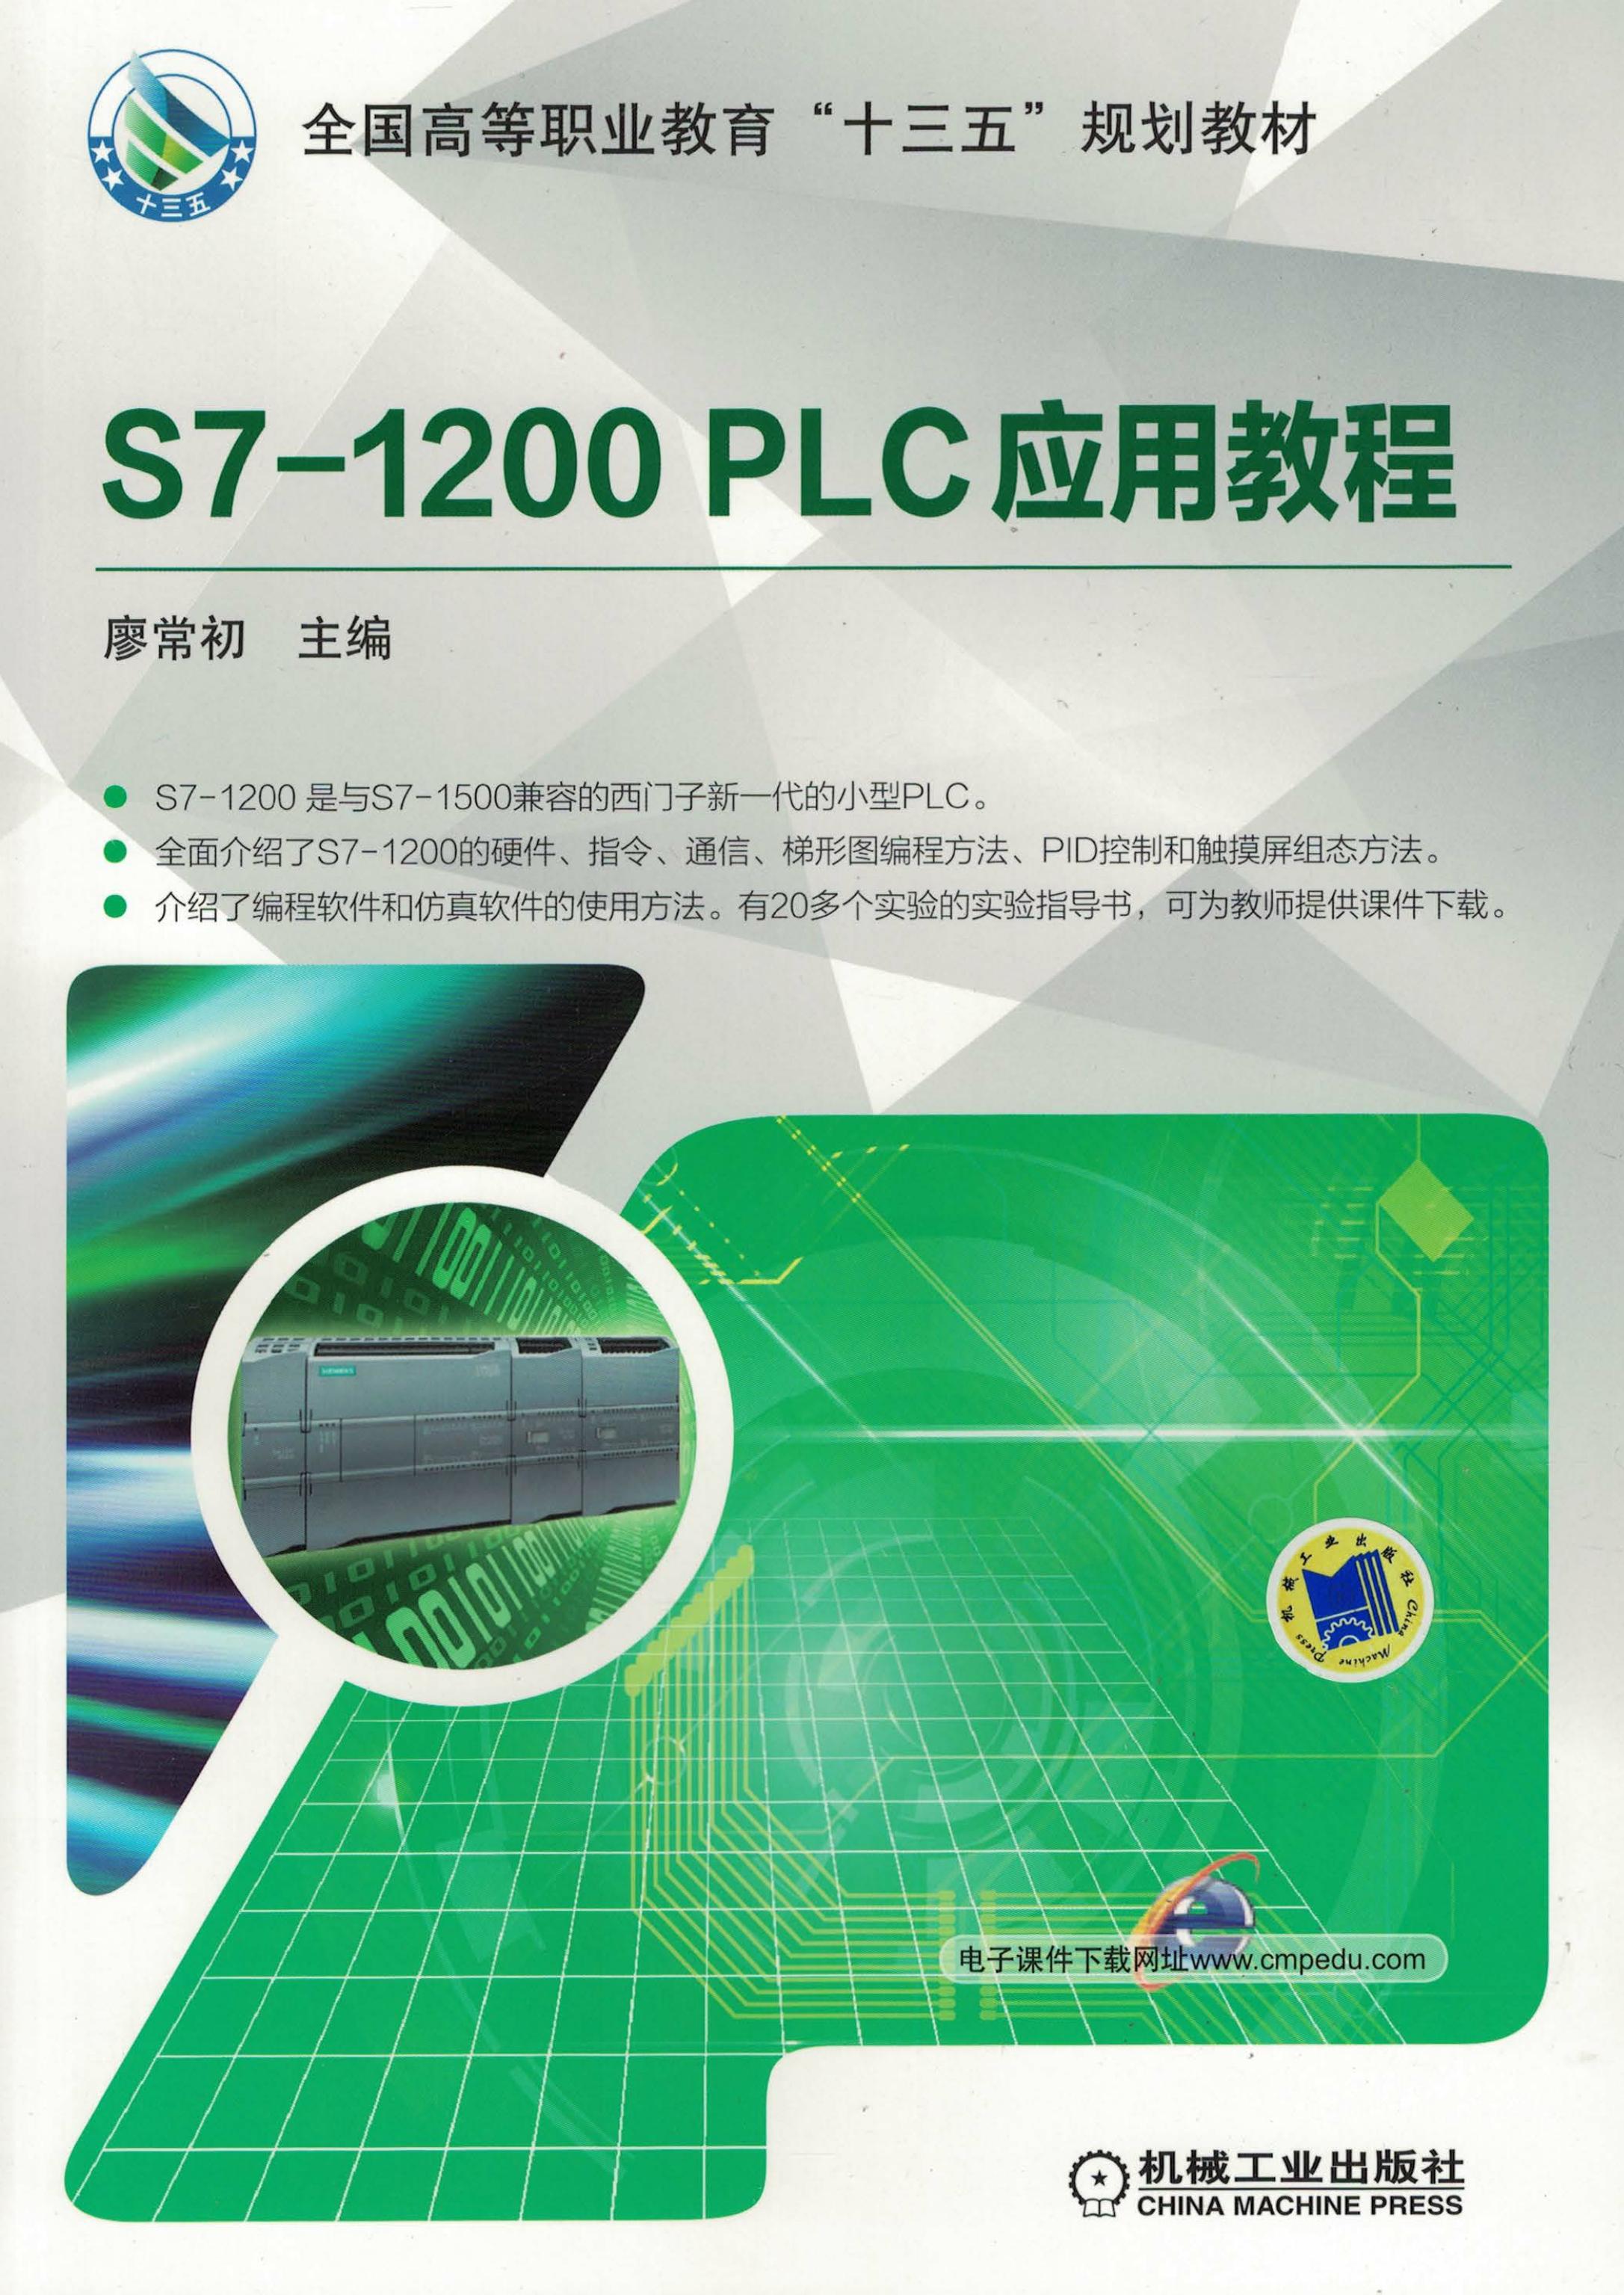 S7-1200 PLC应用教程